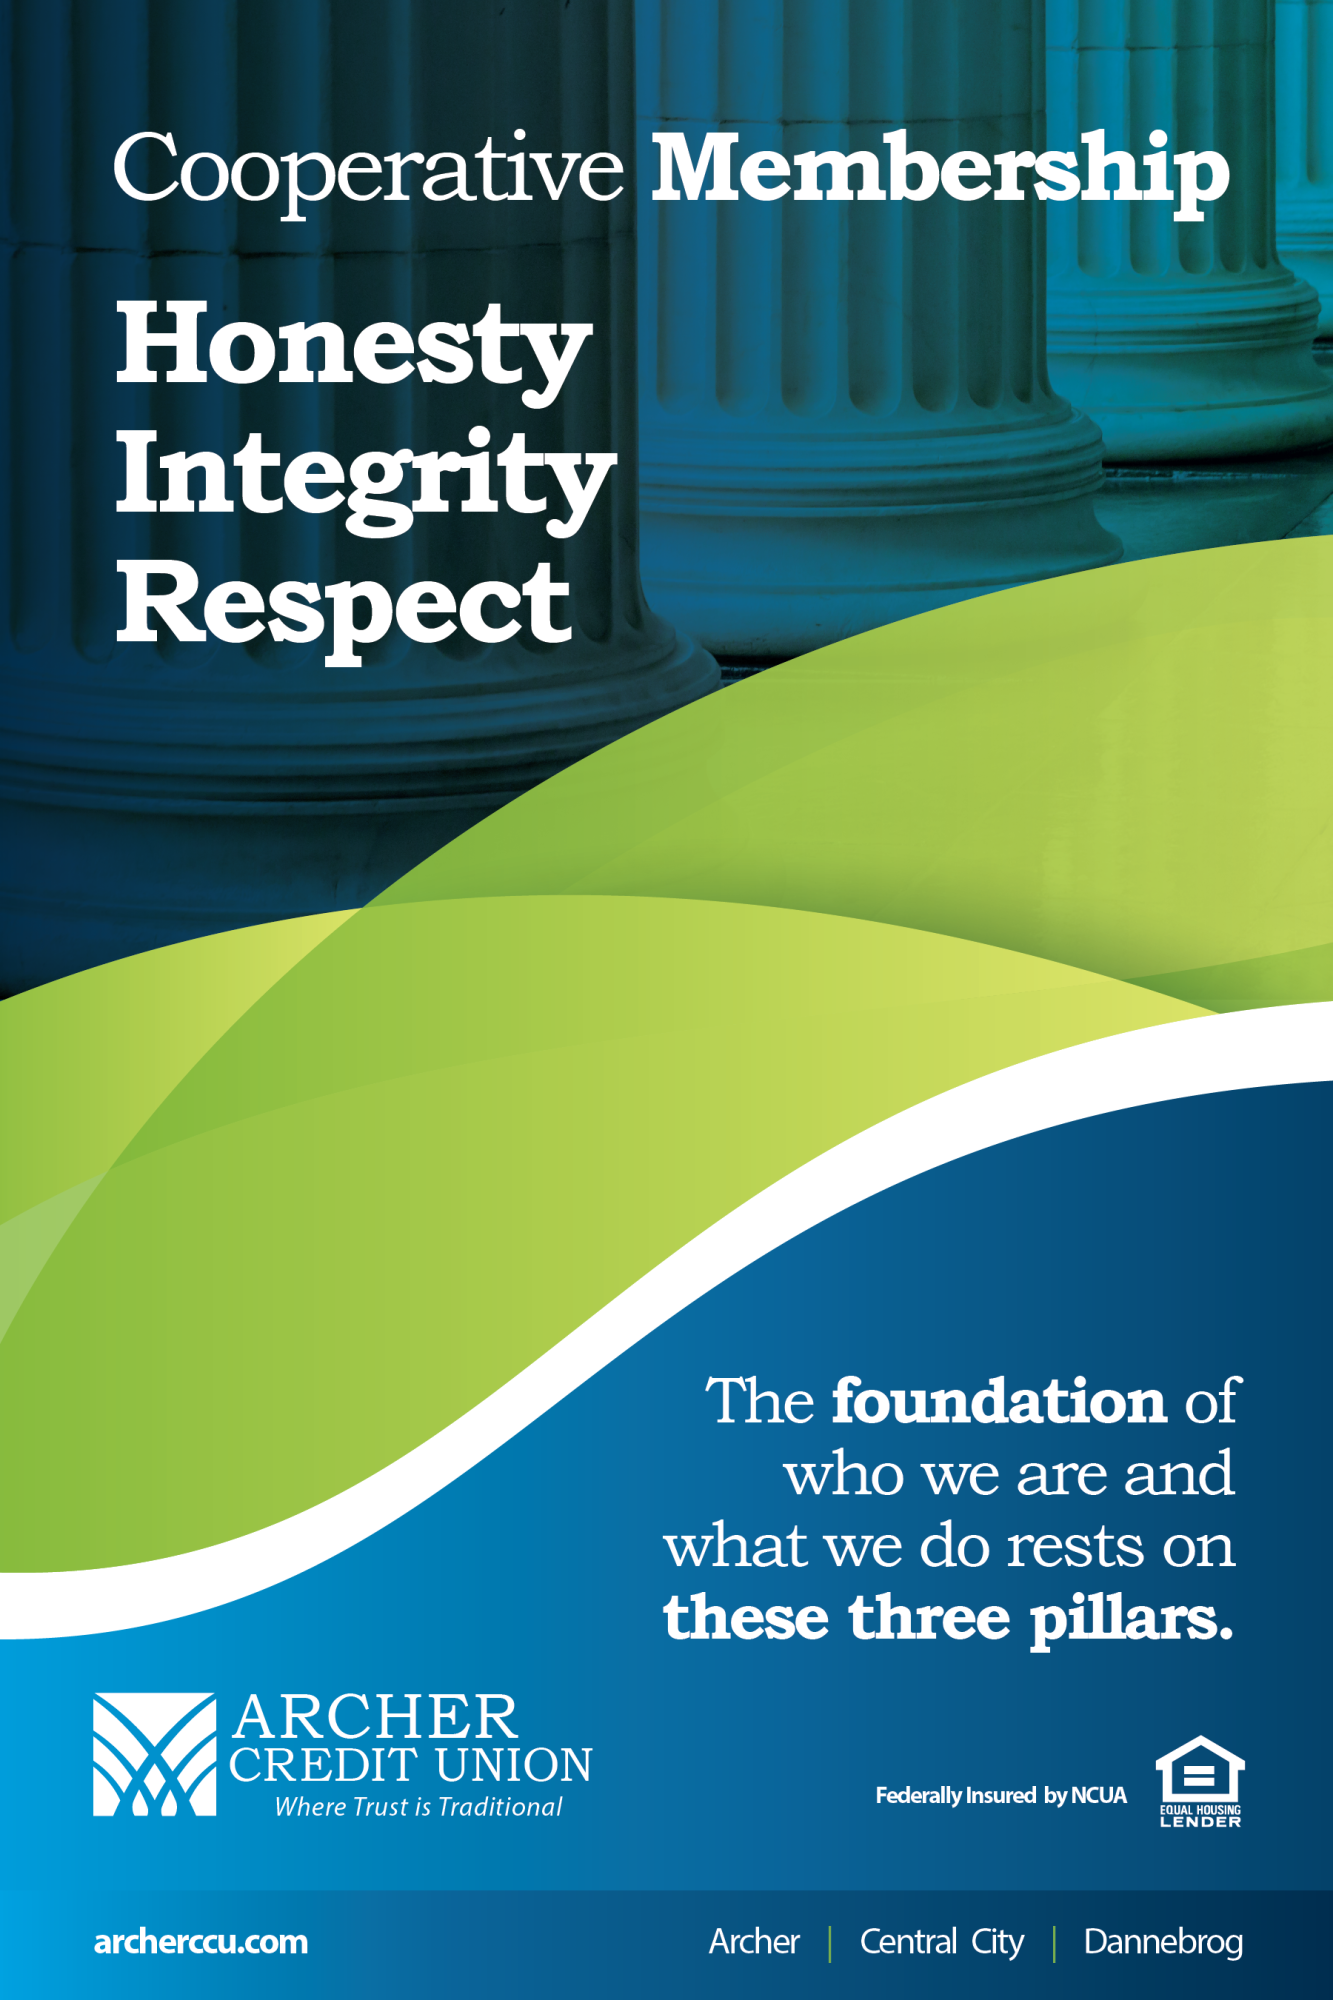 archer credit union poster design 1 honest integrity respect